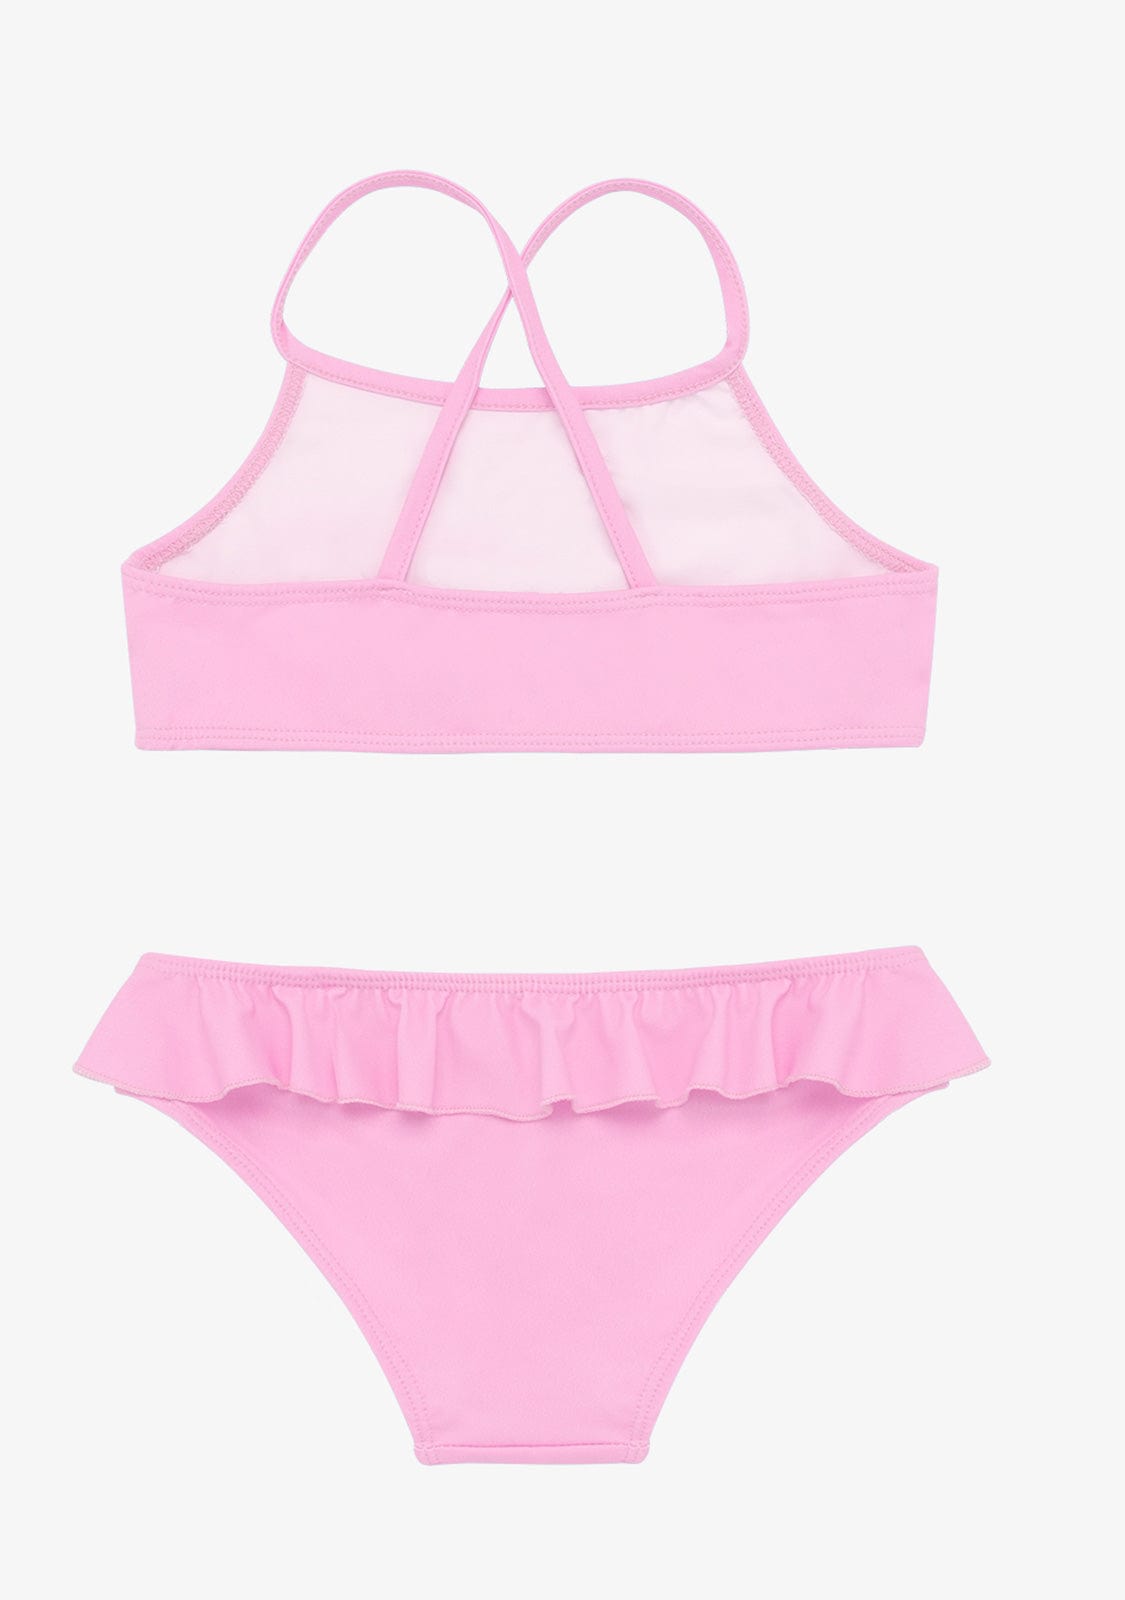 CONGUITOS TEXTIL Clothing Girl's Pink Ruffled Bikini